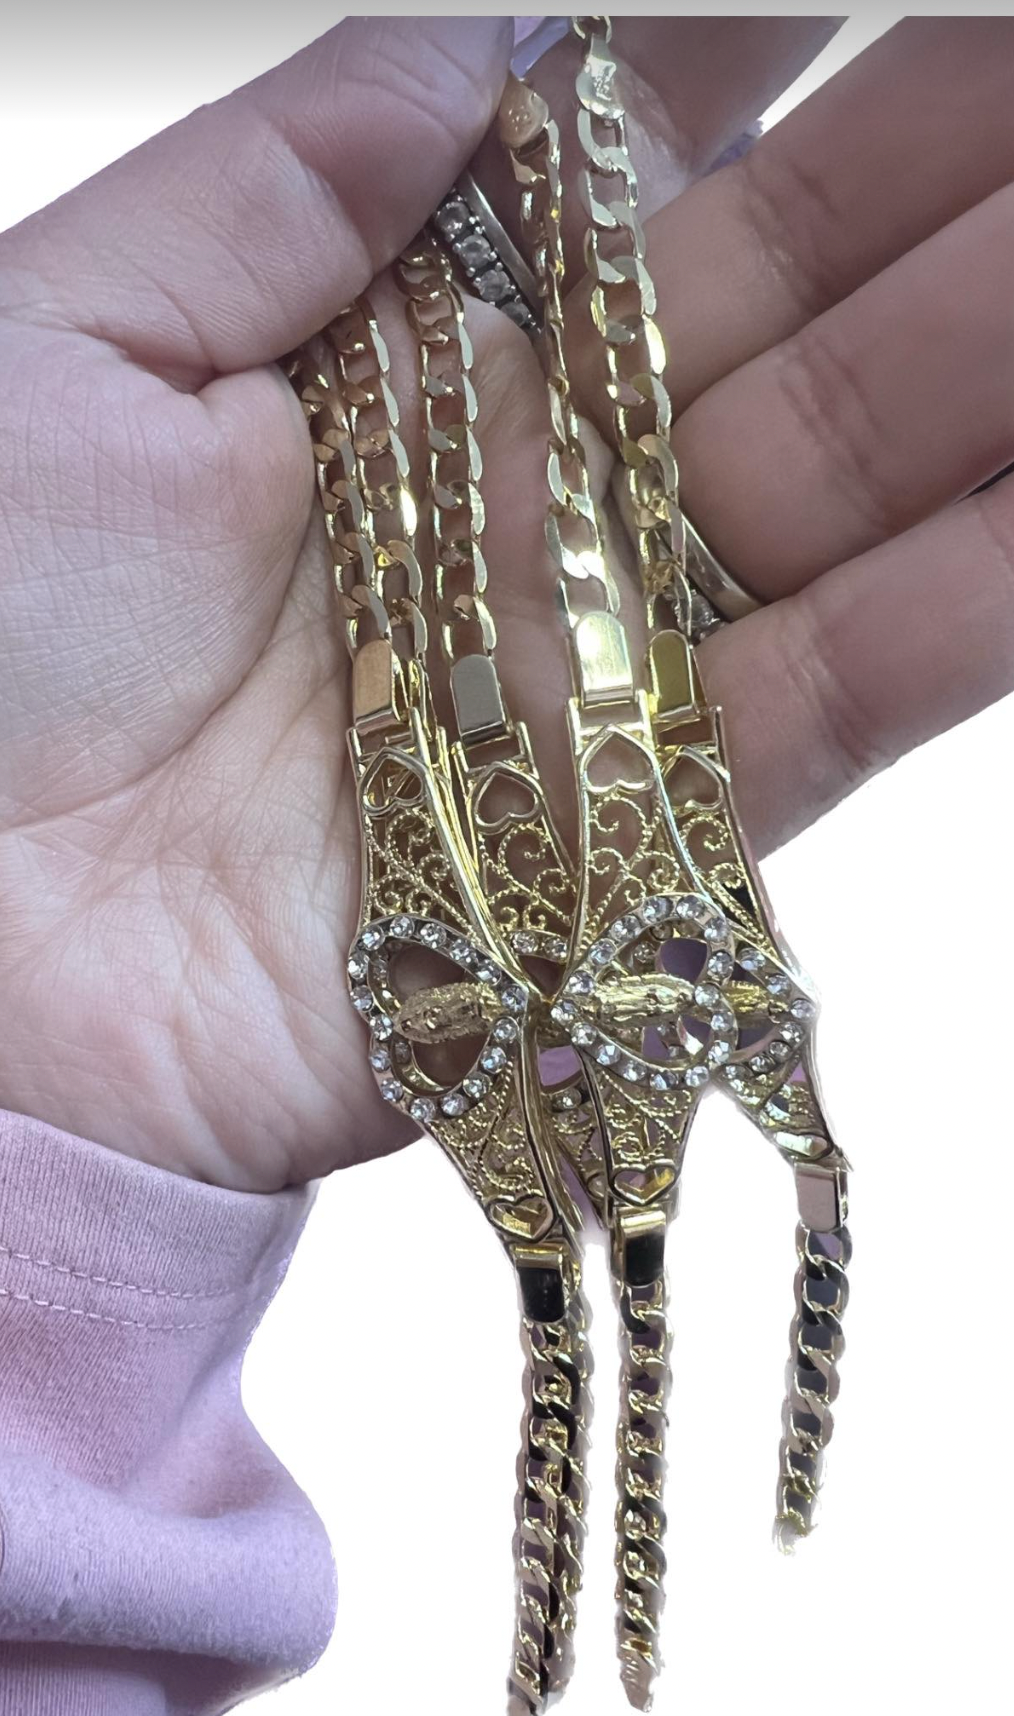 Virgin Mary gold plated bracelet